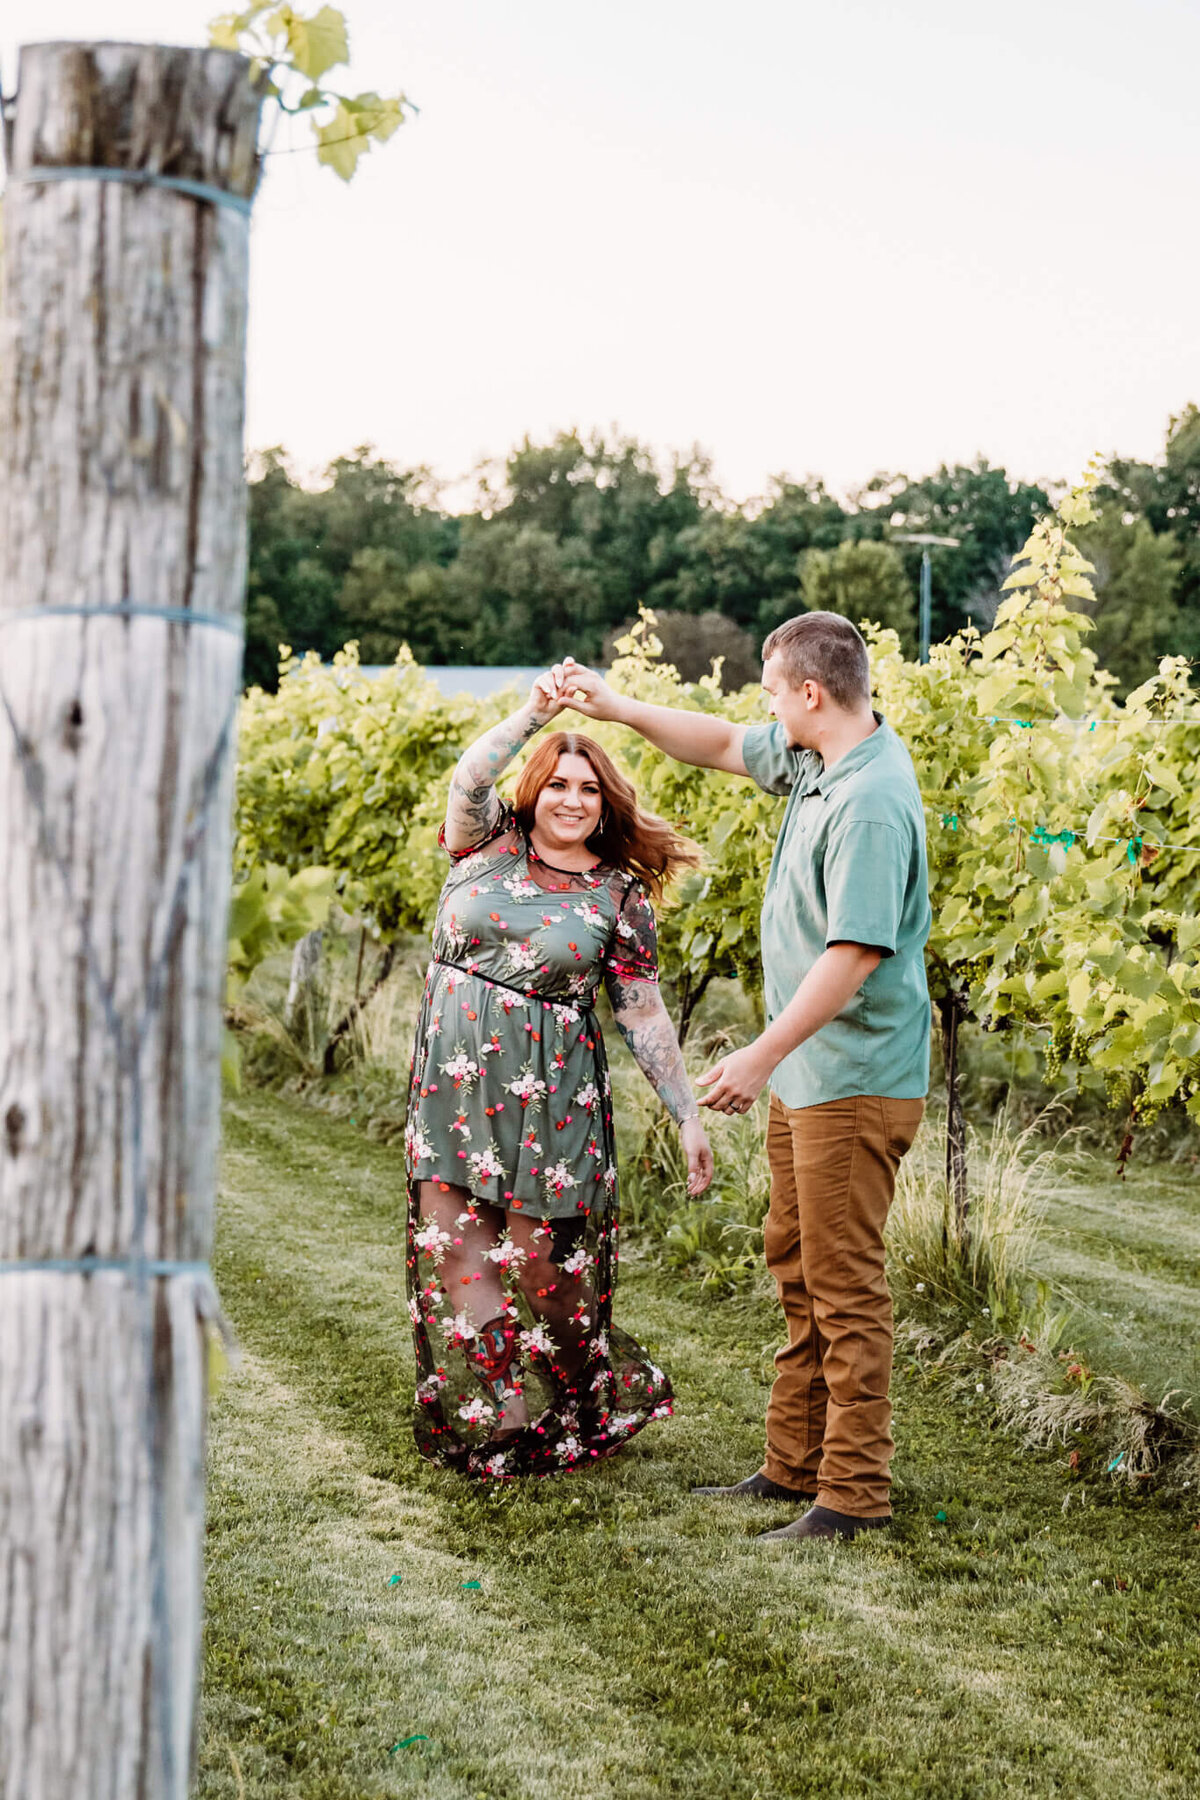 husband twirling wife in a vineyard